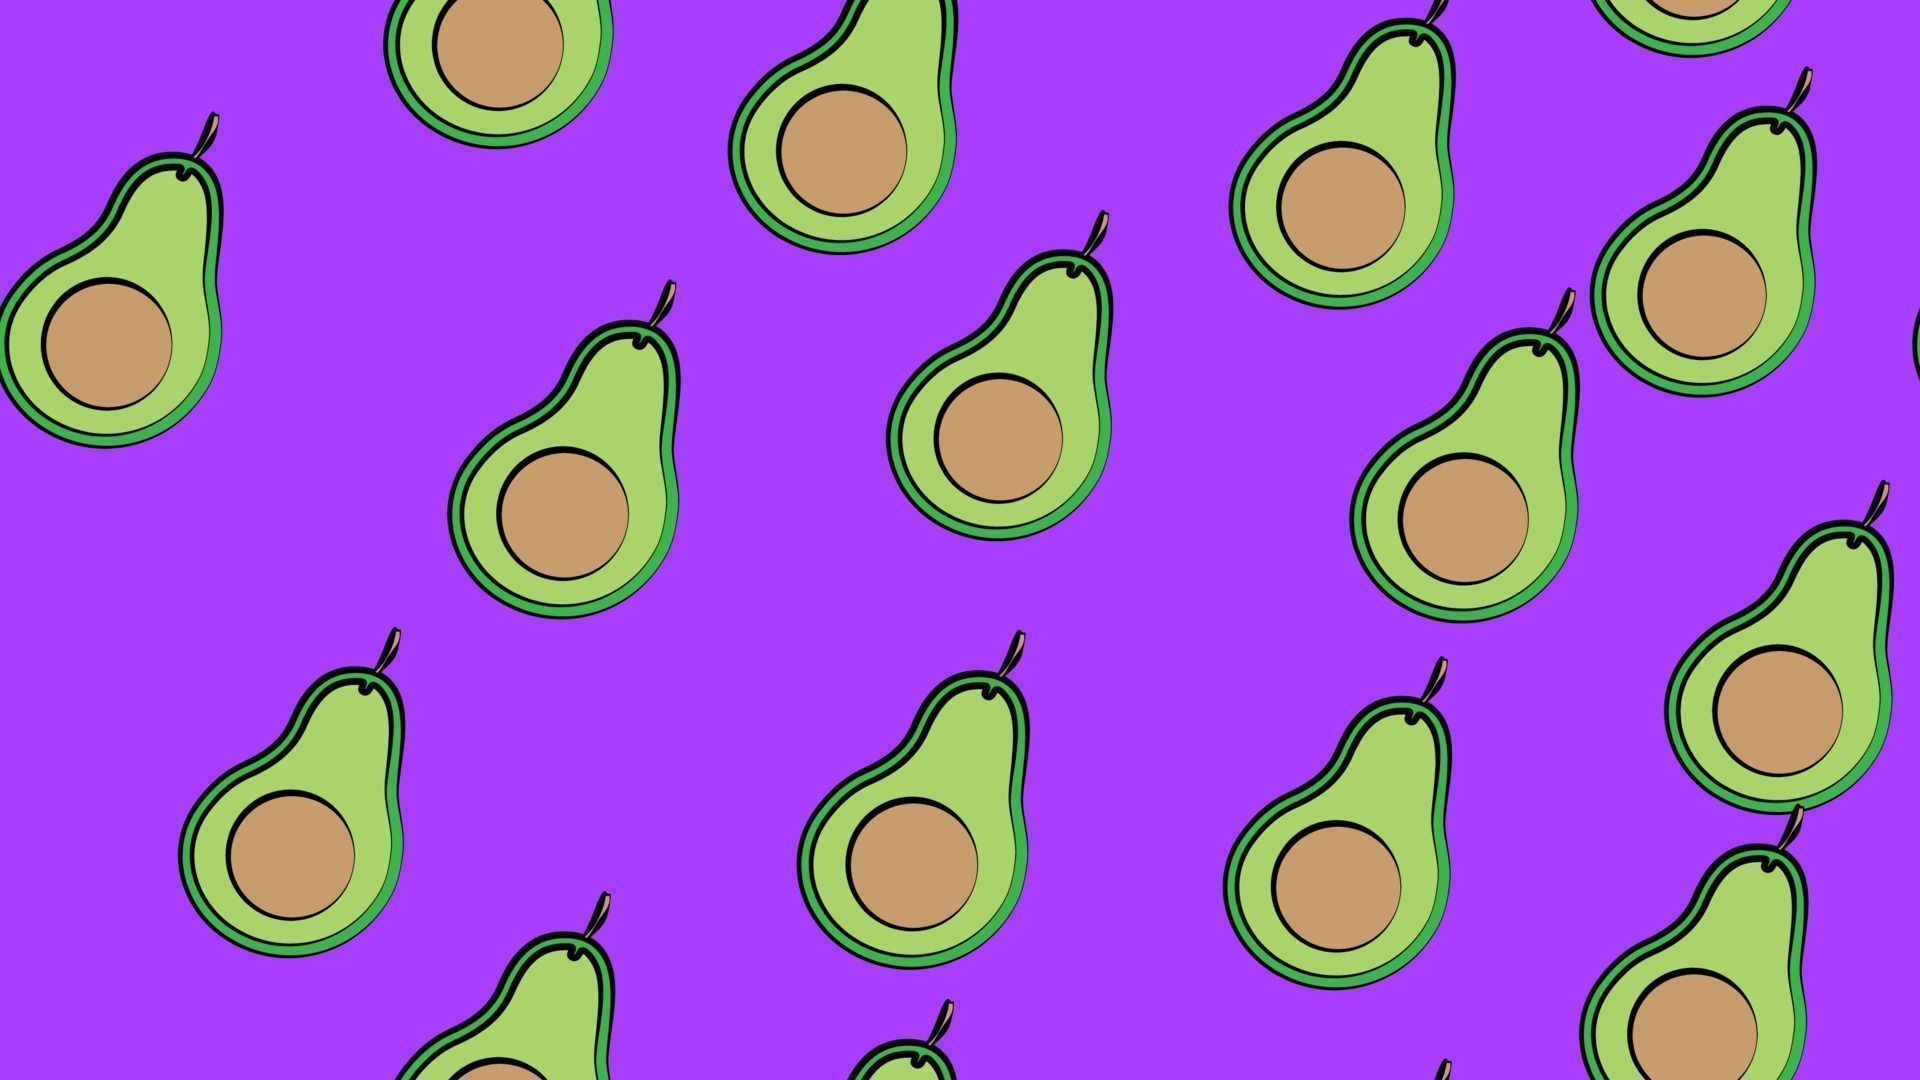 A pattern of avocado halves on a purple background - Avocado